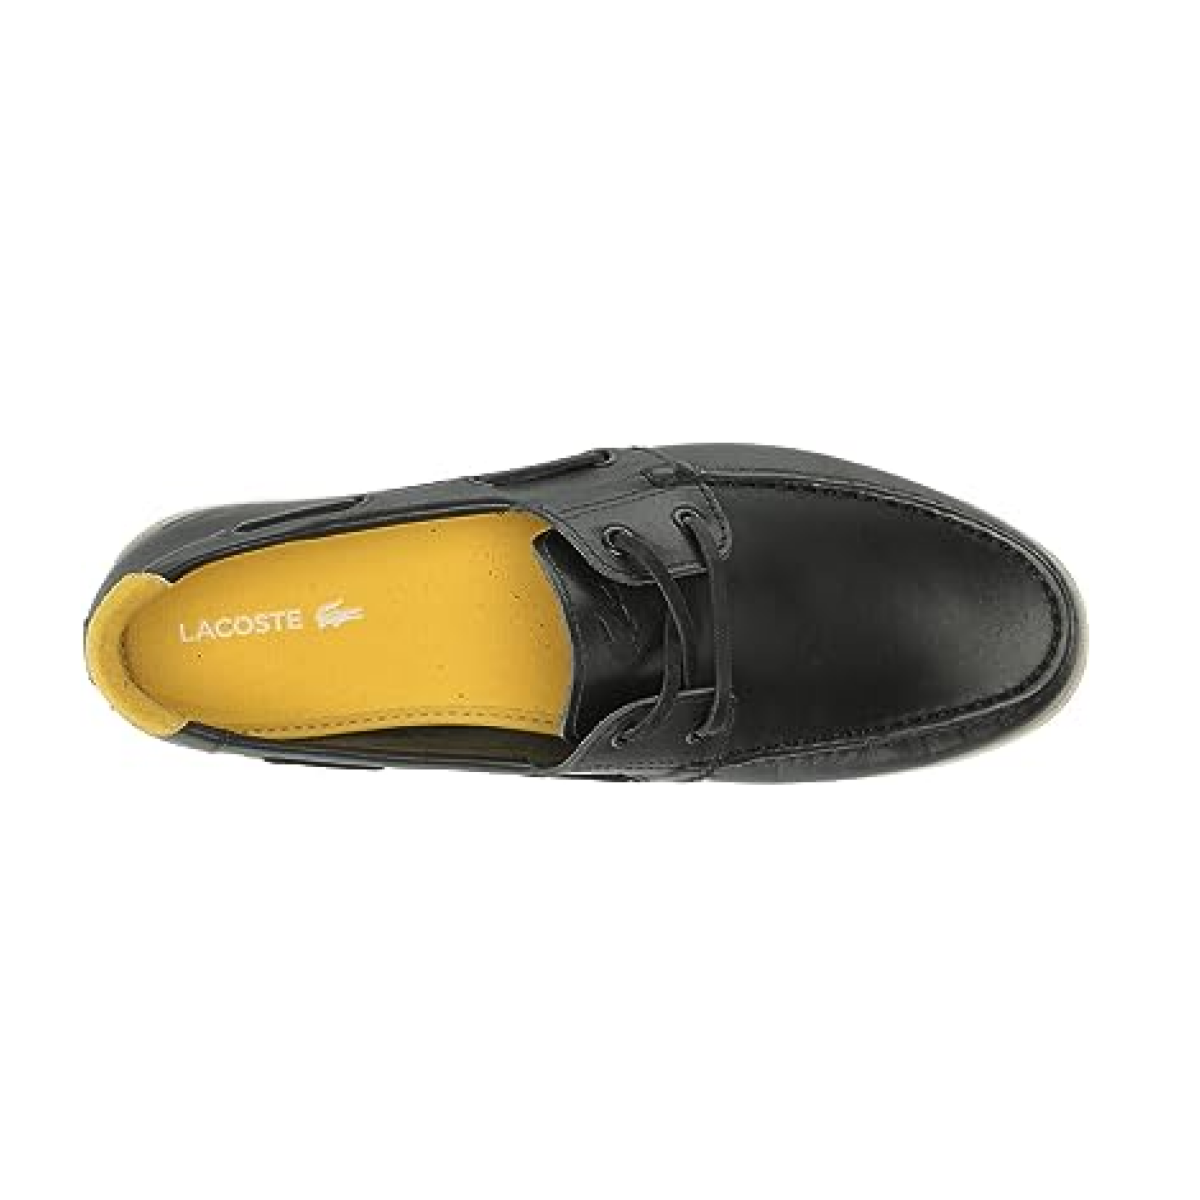 LACOSTE 7-45CMA0007454 CASPIAN 123 MN'S (Medium) Black/Off White Leather Lifestyle Shoes